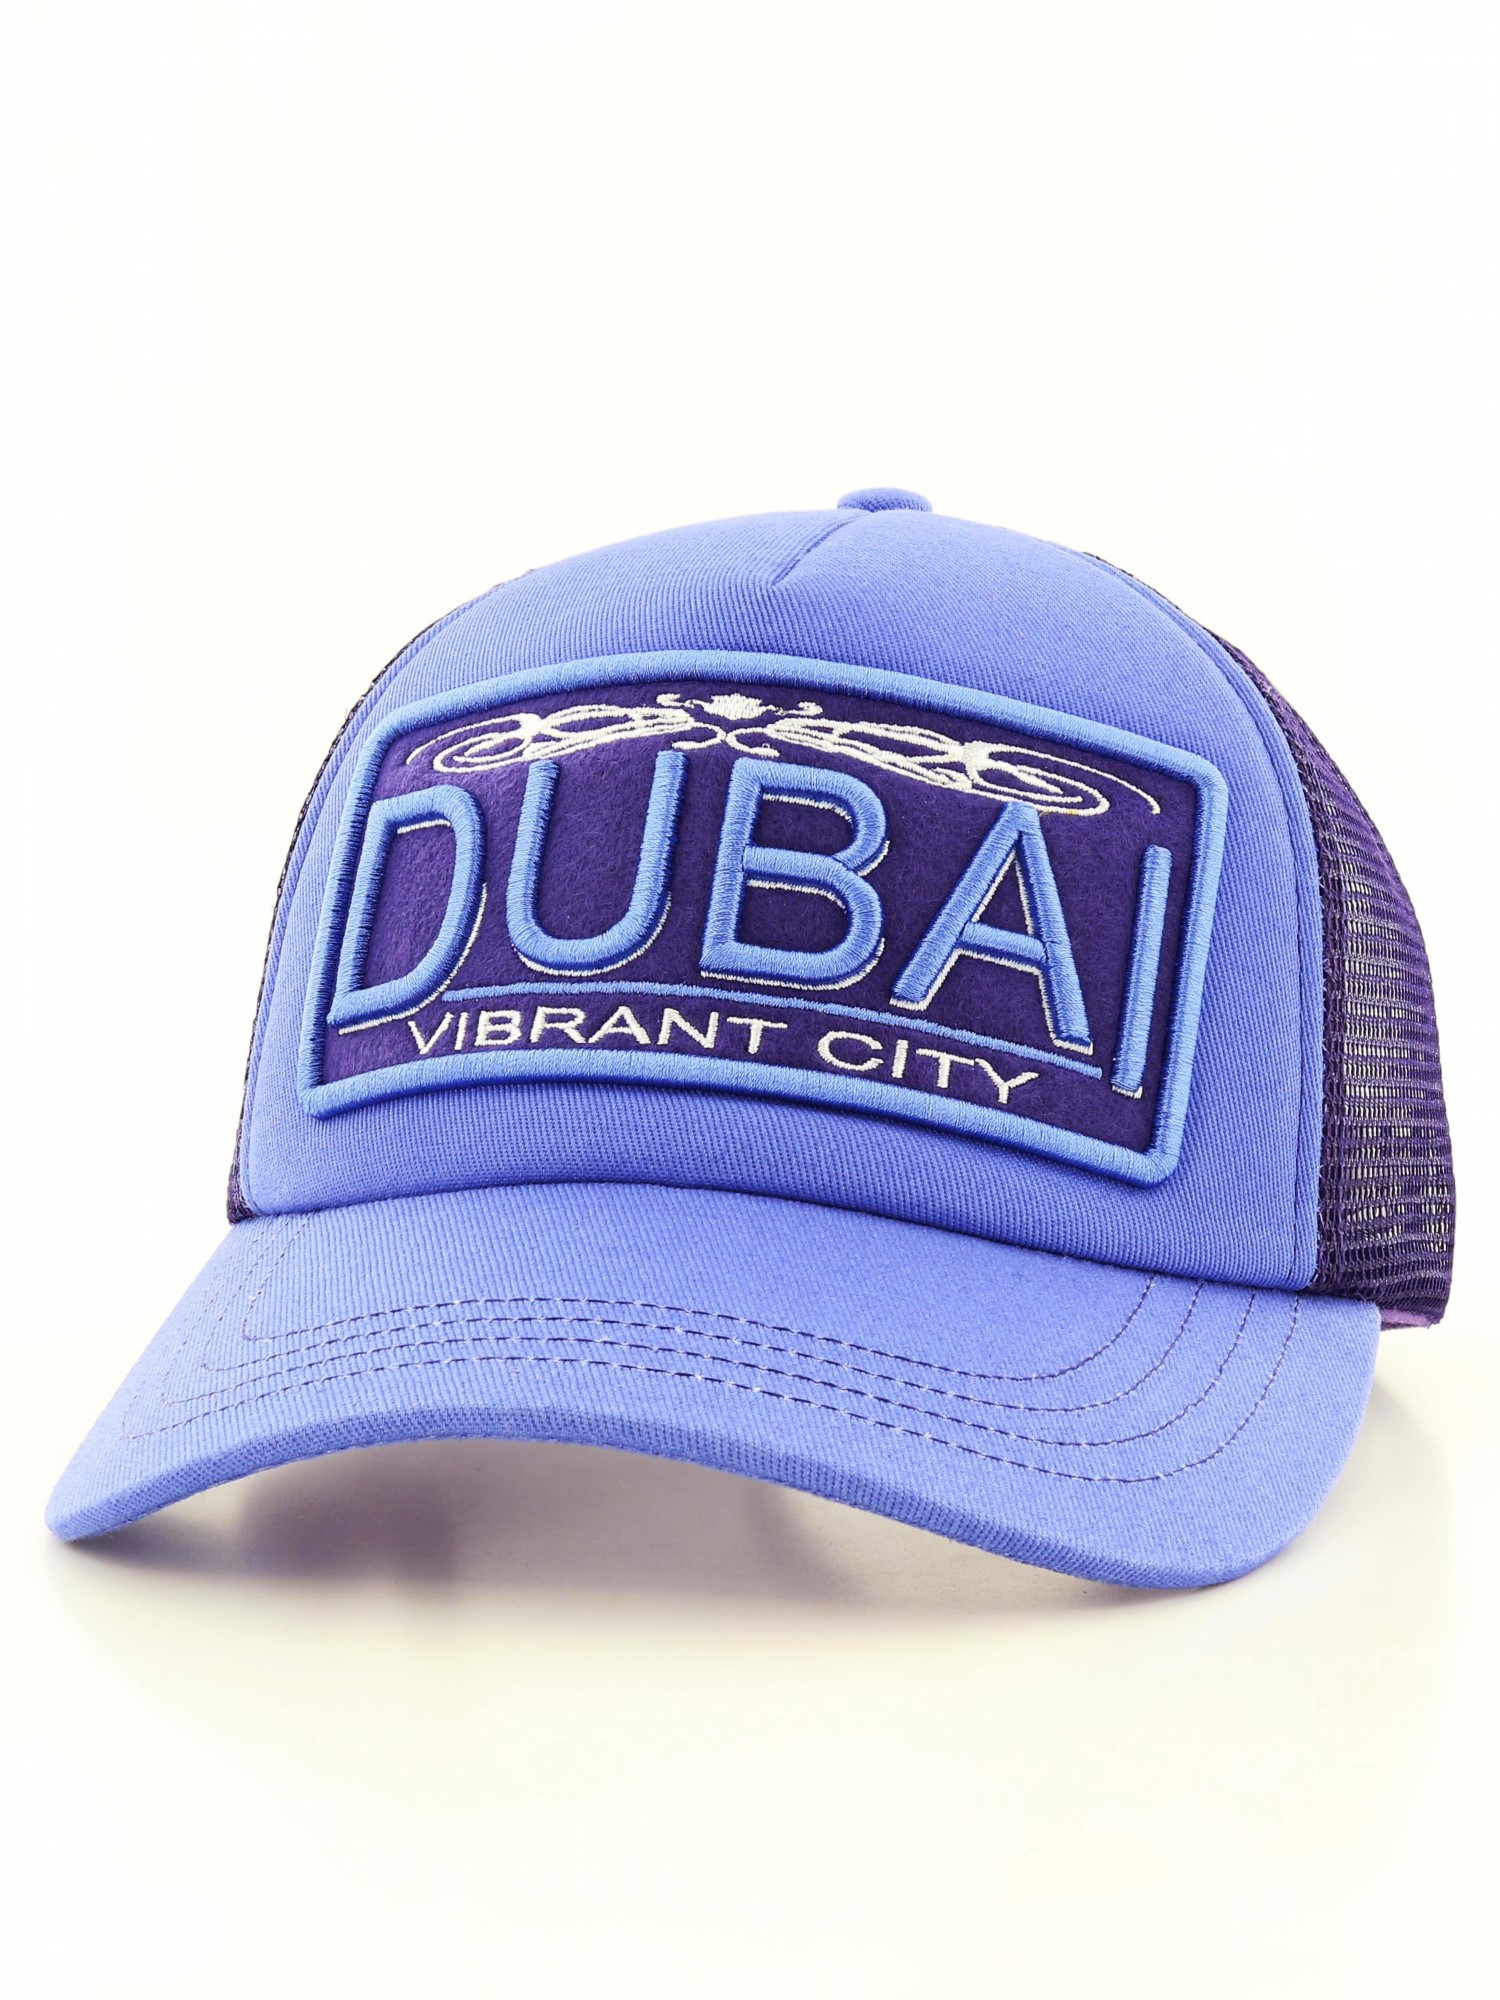 B180 UAE Dubai Vibrant City Blue Trucker Cap